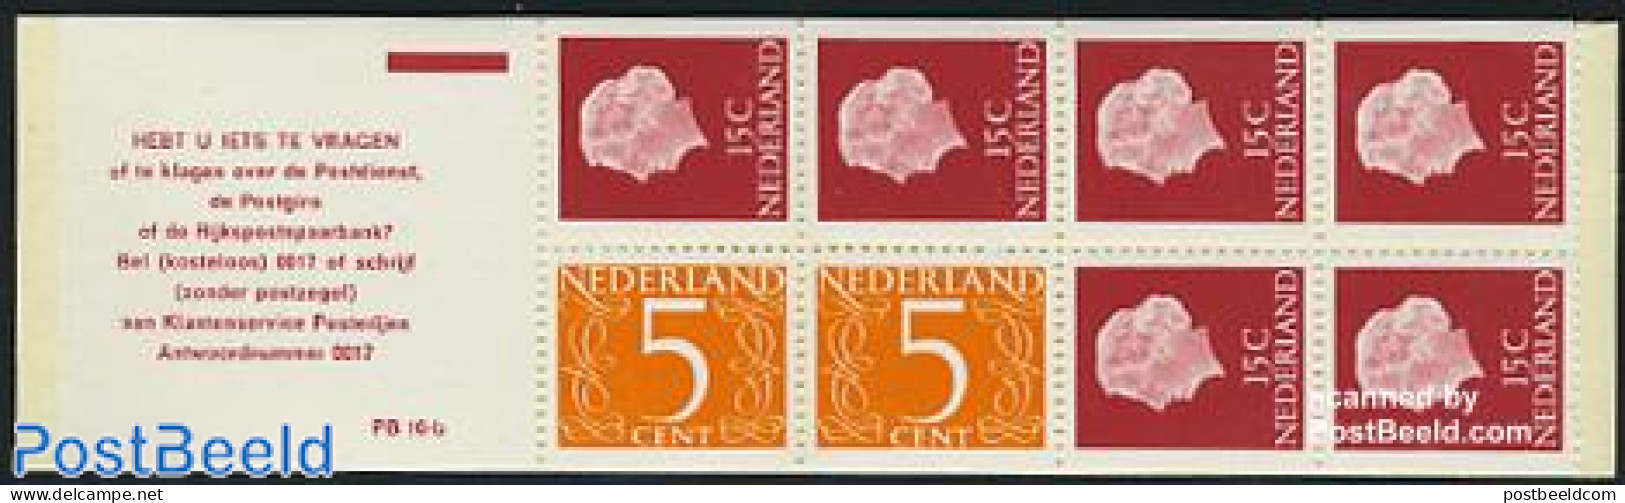 Netherlands 1971 2x5,6x15c Booklet, Phosphor, Text: HEBT U IETS TE, Mint NH, Stamp Booklets - Ungebraucht